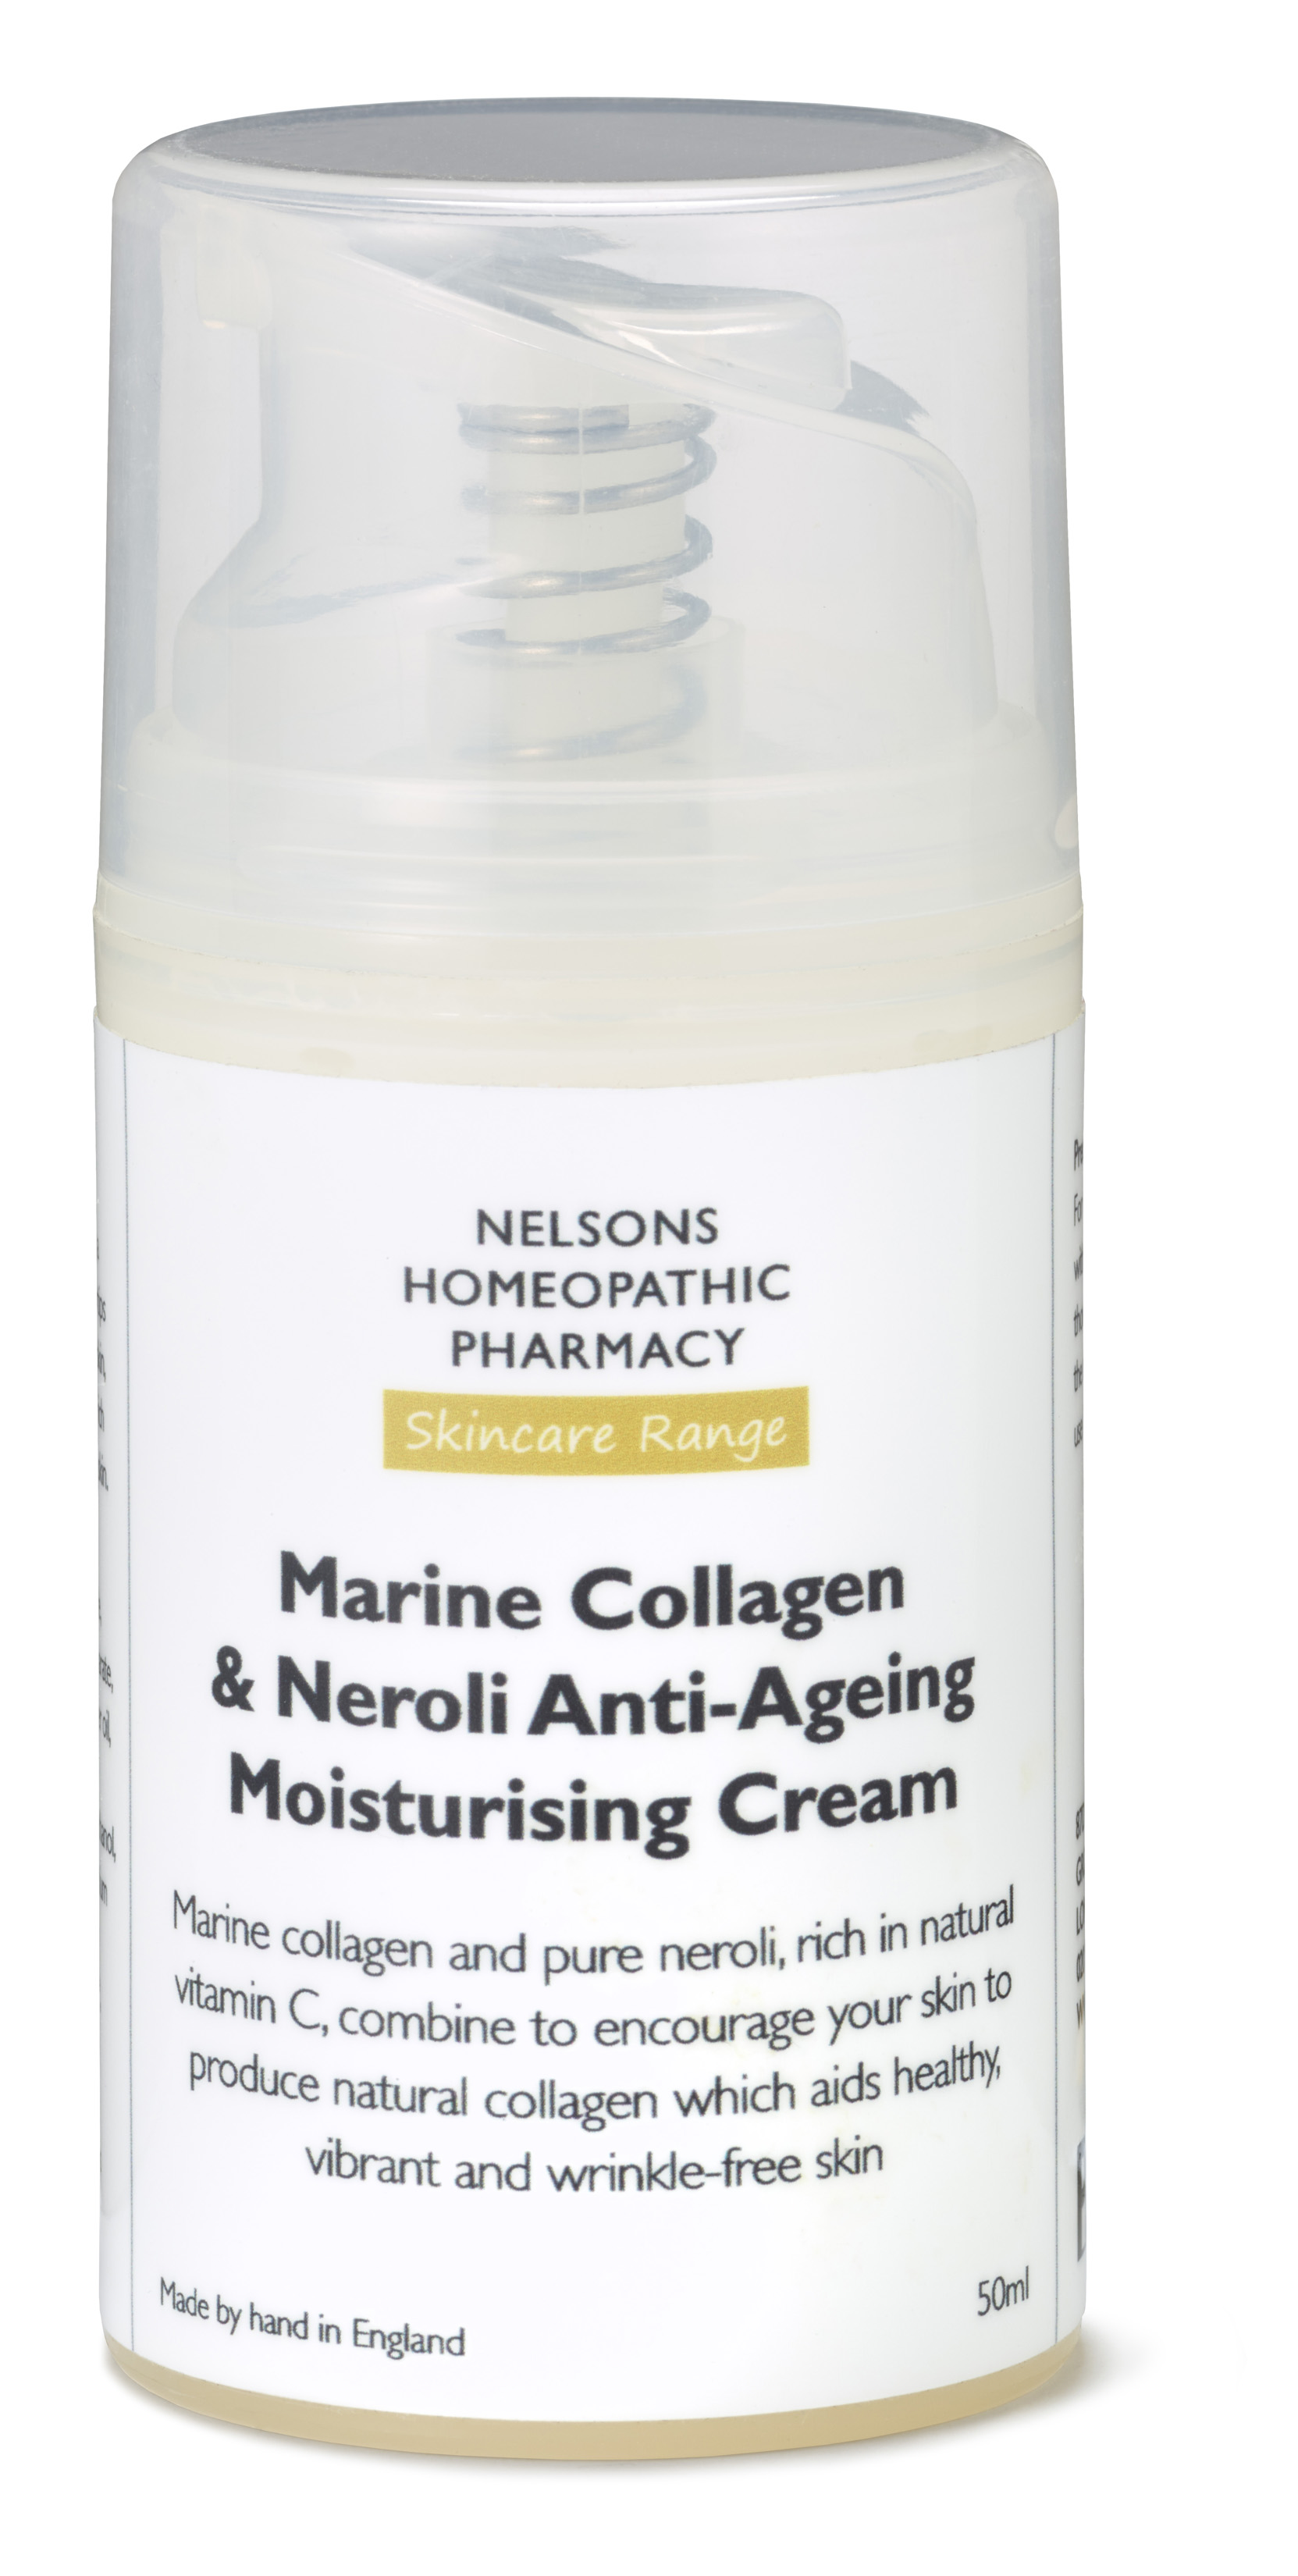 Nelson's Marine Collagen and Neroli Moisturising Cream